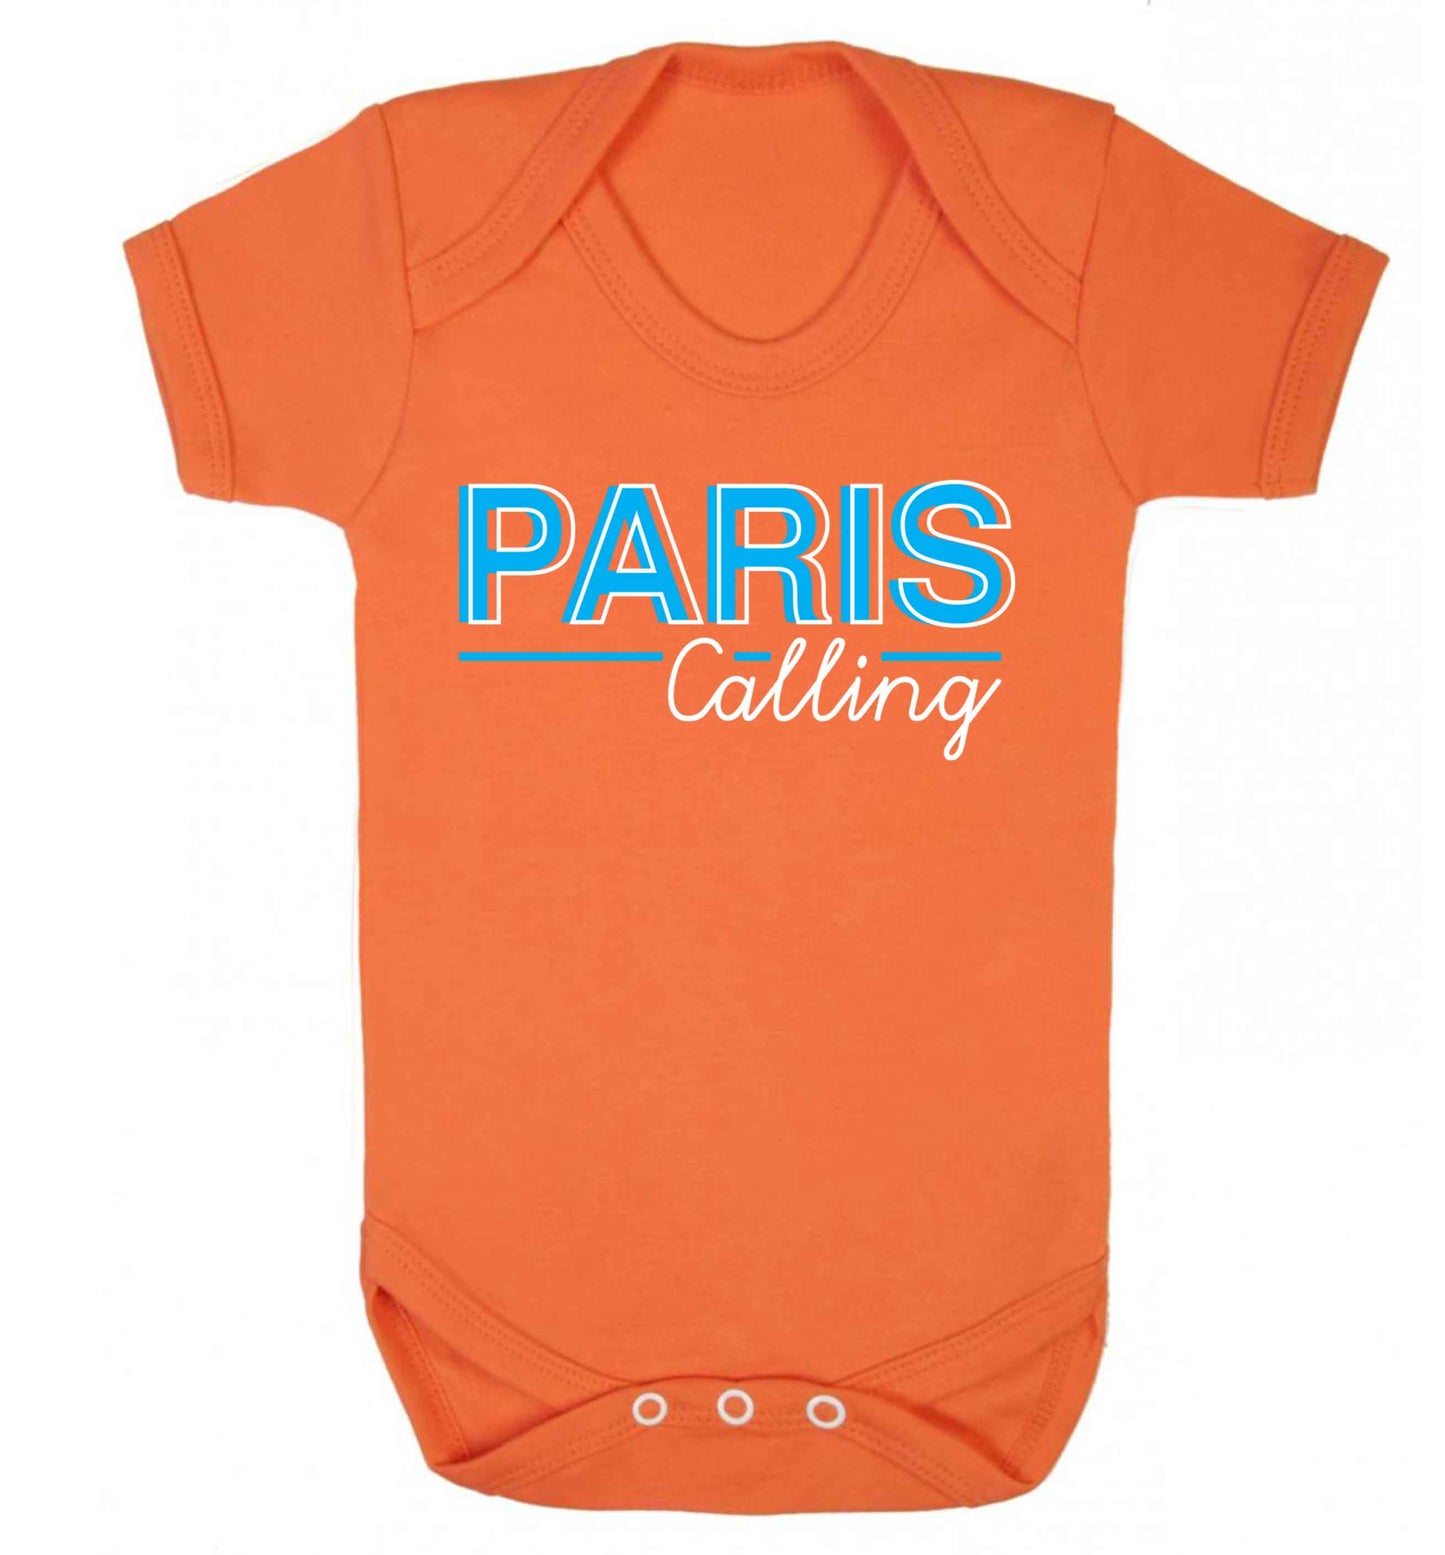 Paris calling Baby Vest orange 18-24 months